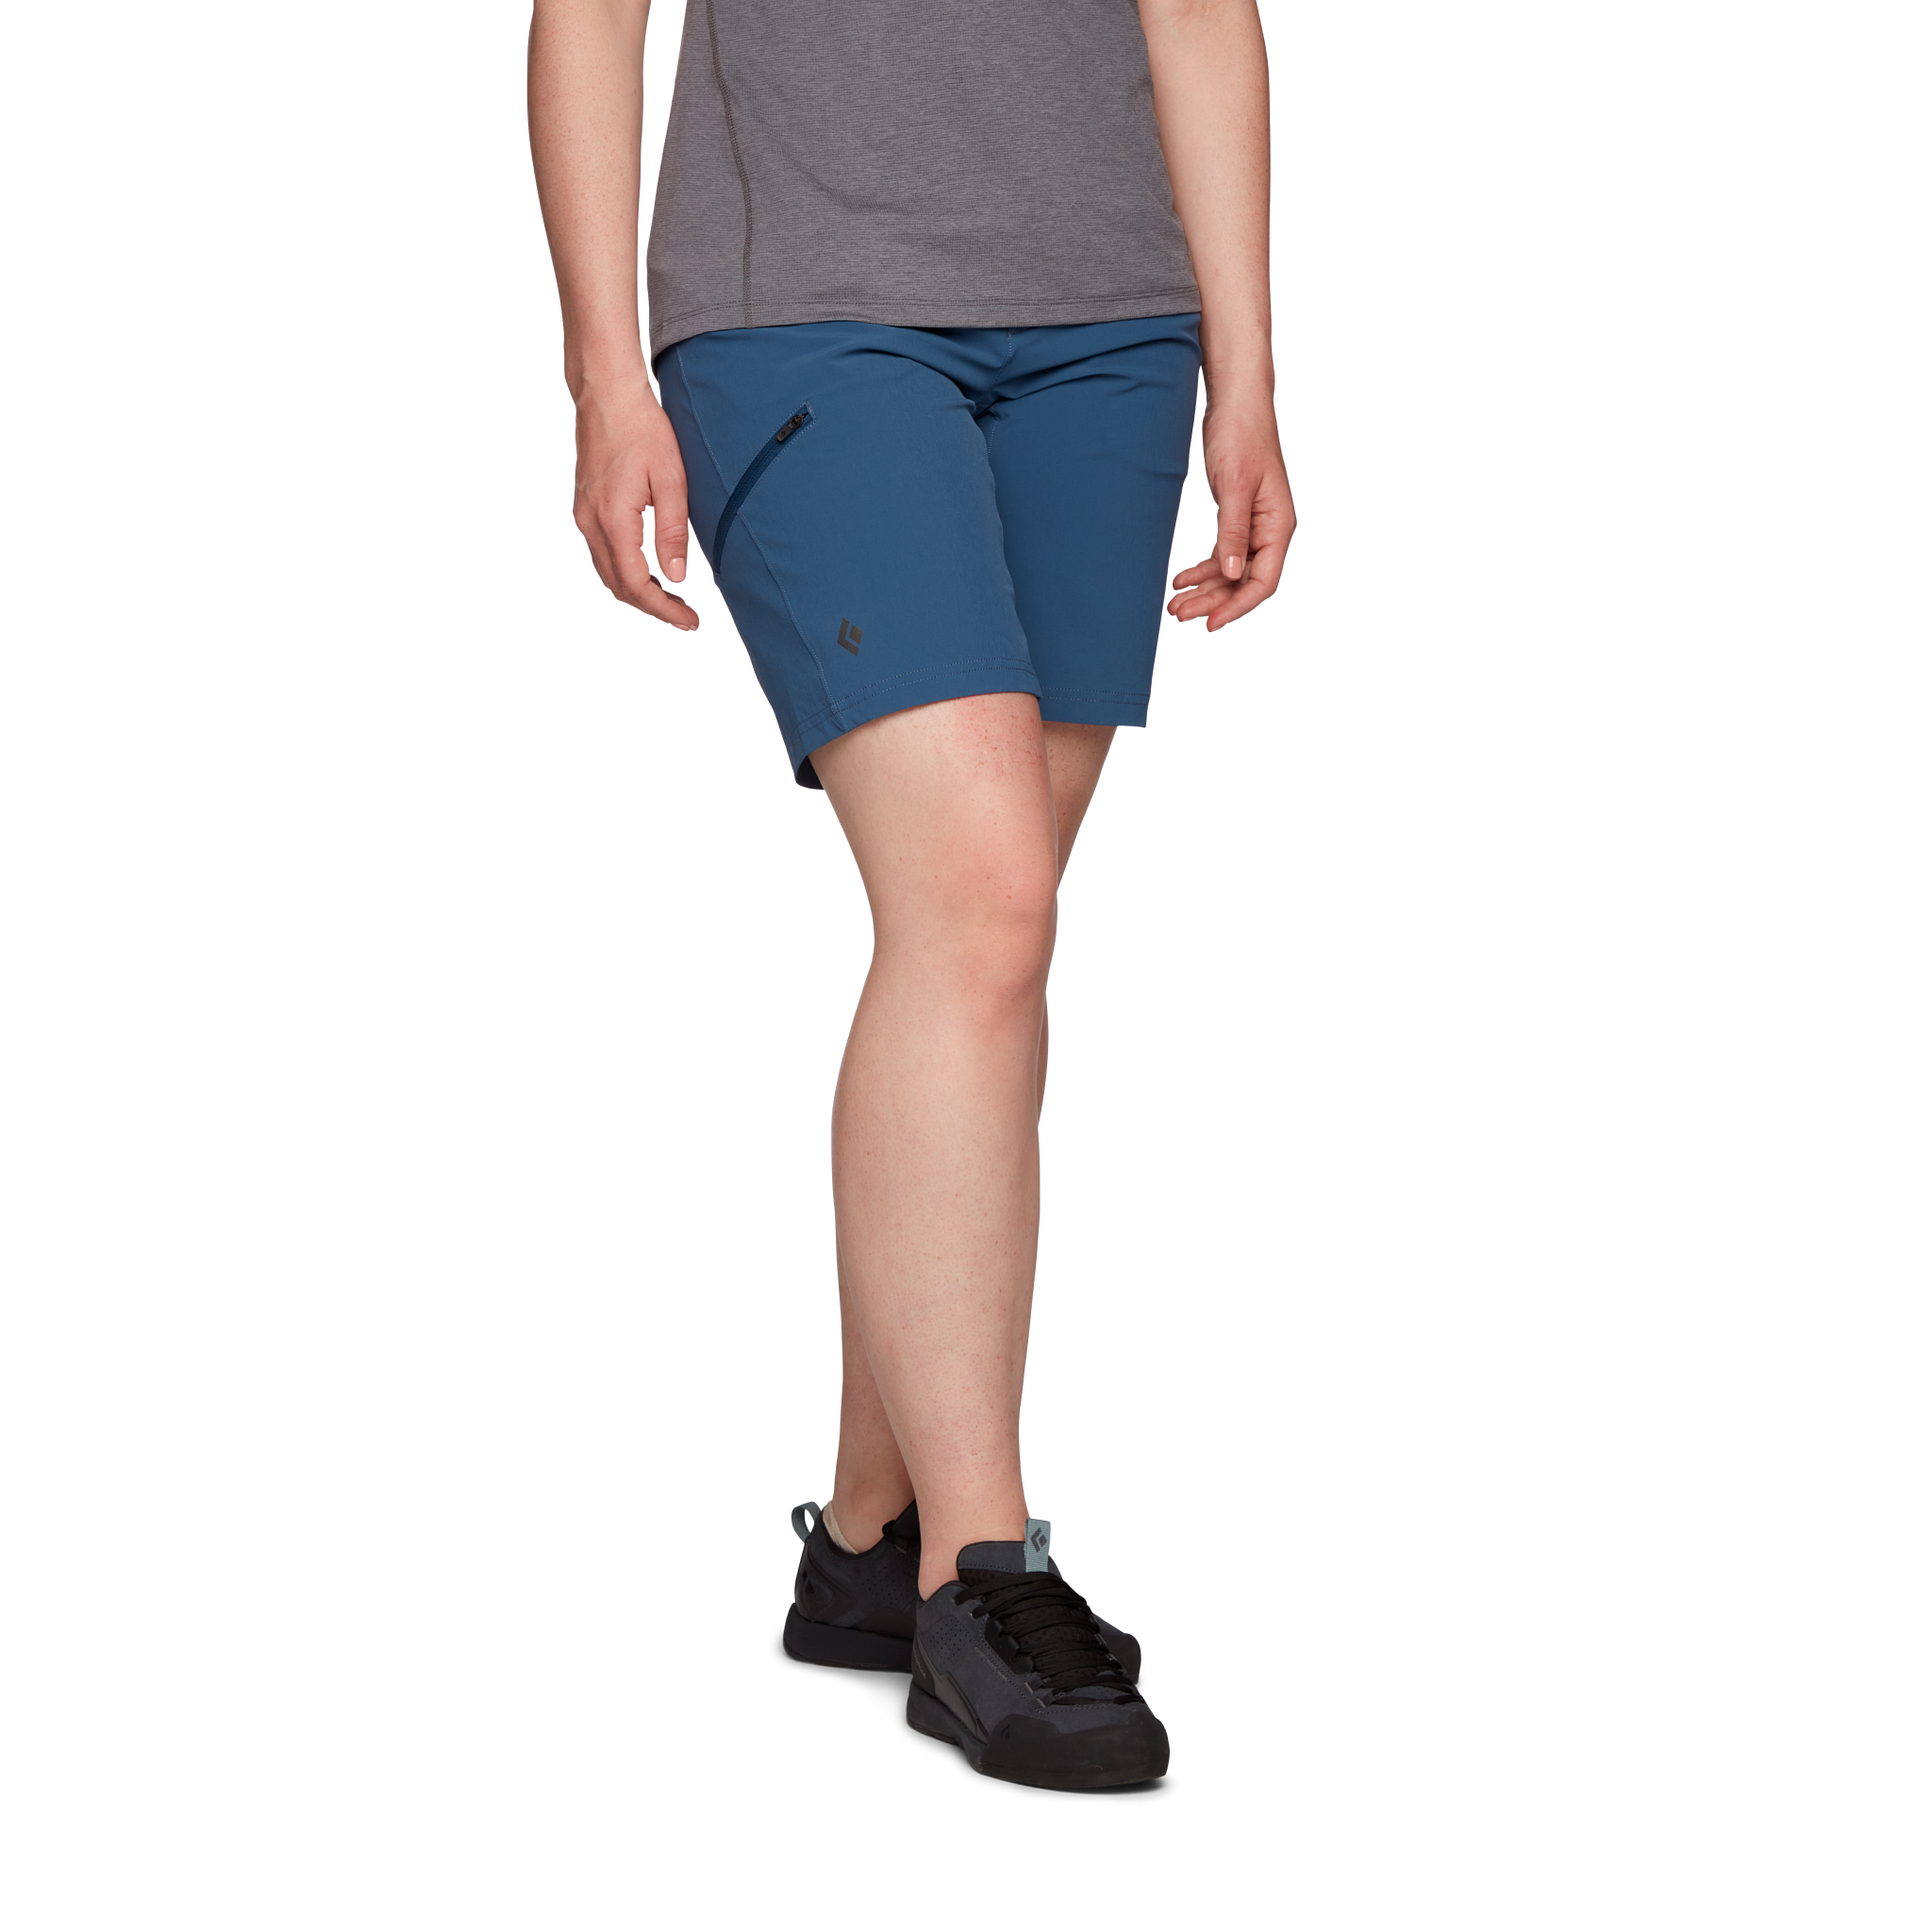 Black Diamond Equipment Women's Valley Shorts Size 2, in Ink Blue